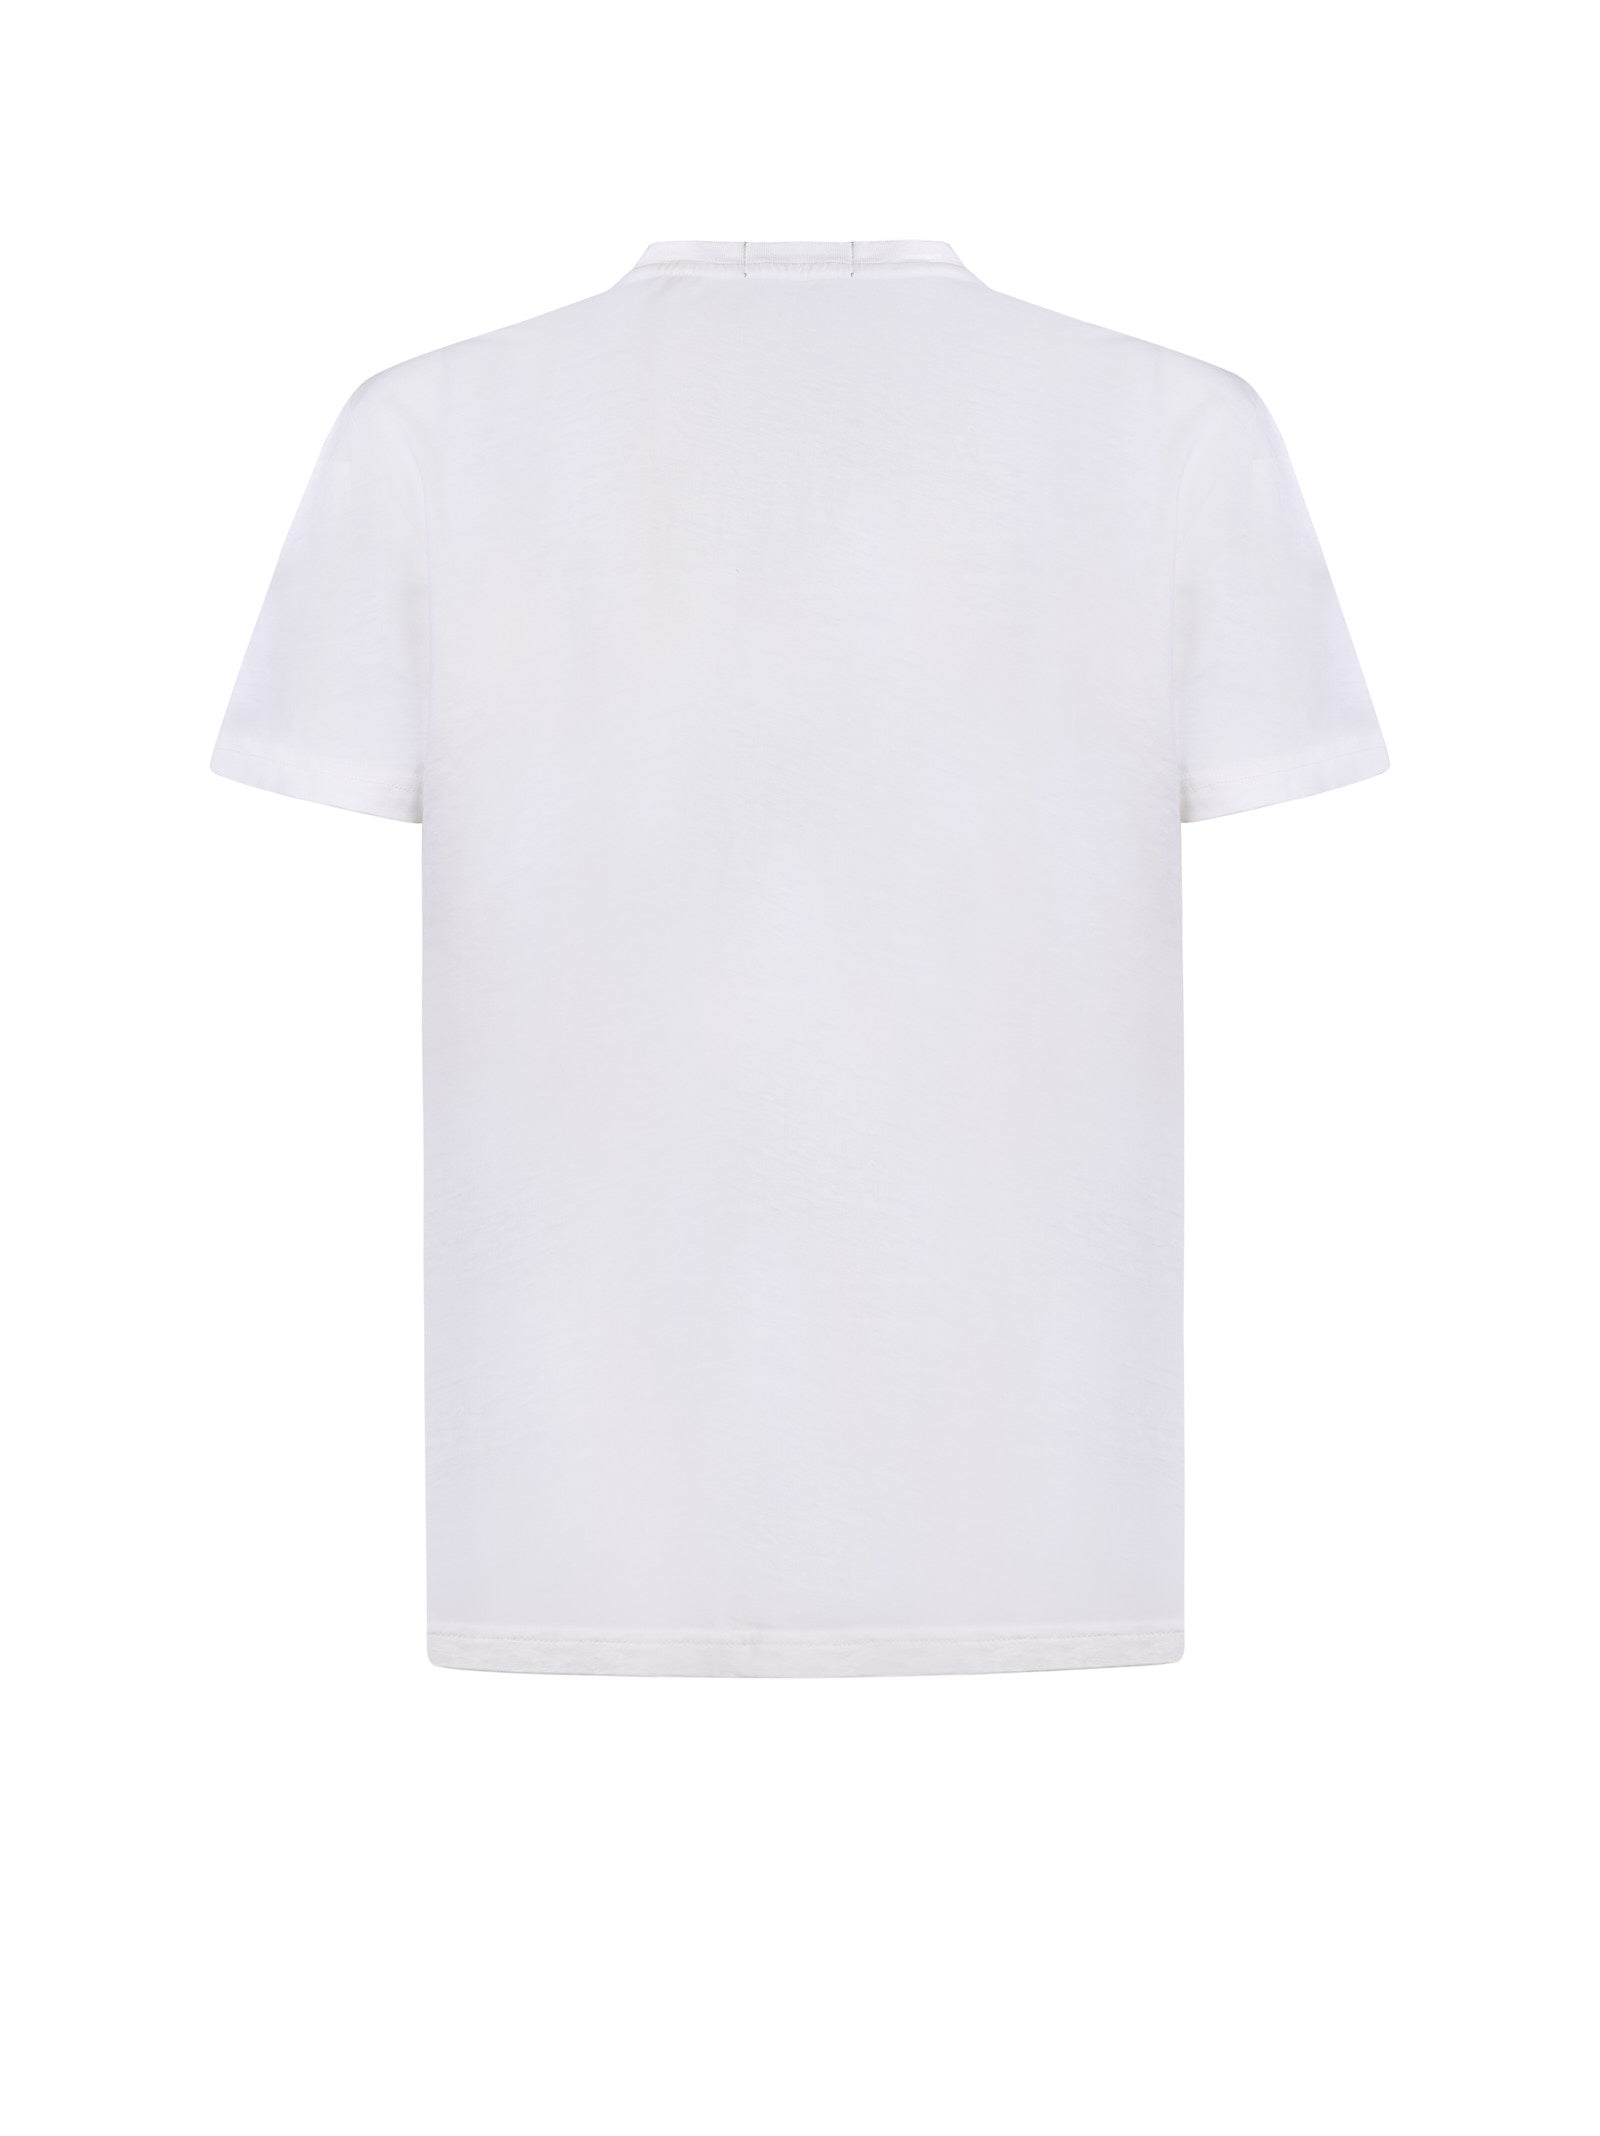 T-shirt POLO RALPH LAUREN
Ceramic white